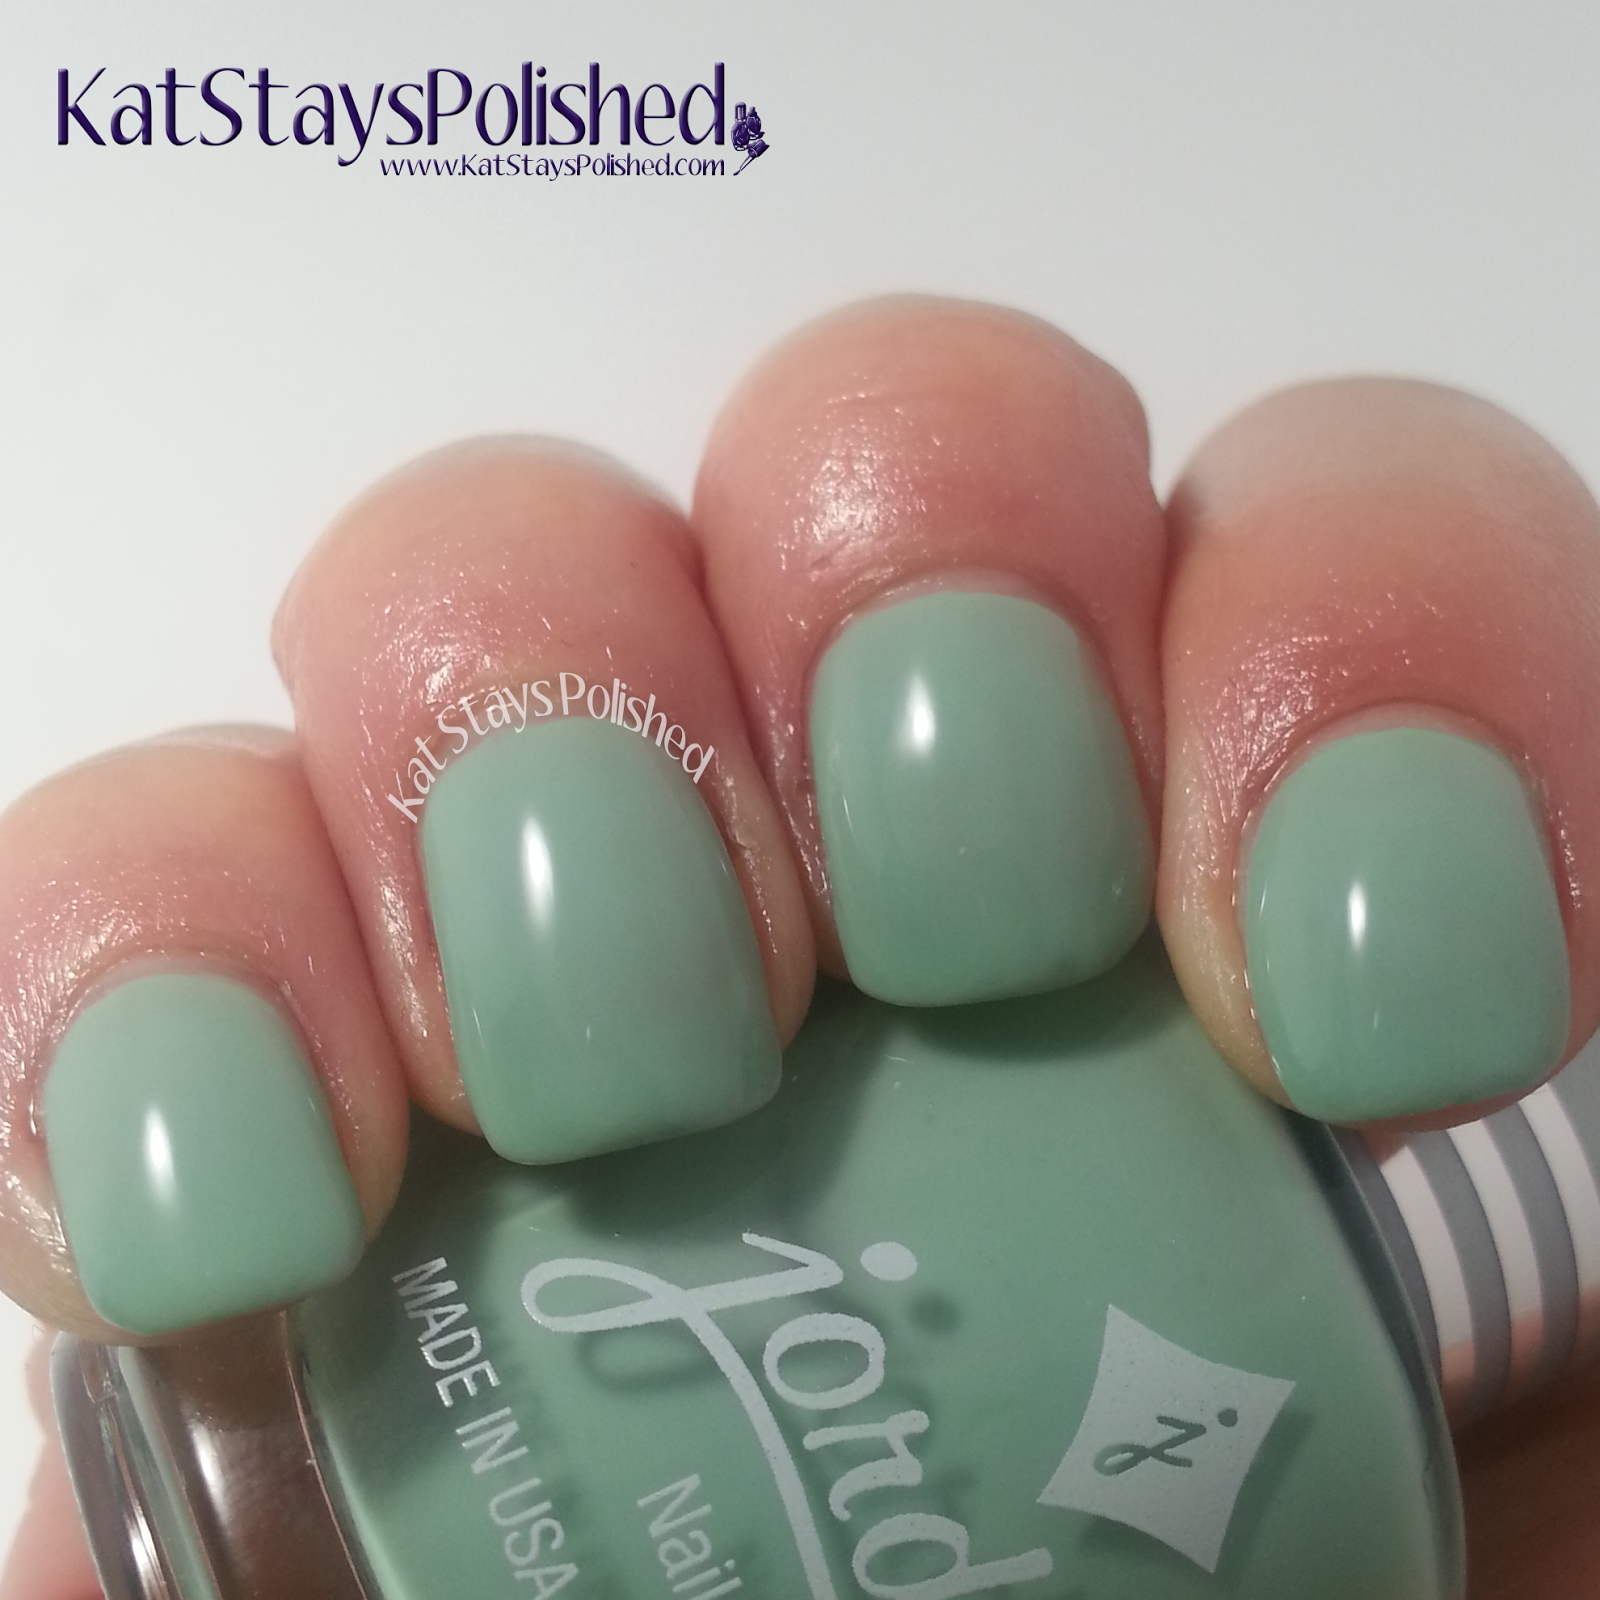 Jordana Playful Pastels - Merry Mint | Kat Stays Polished